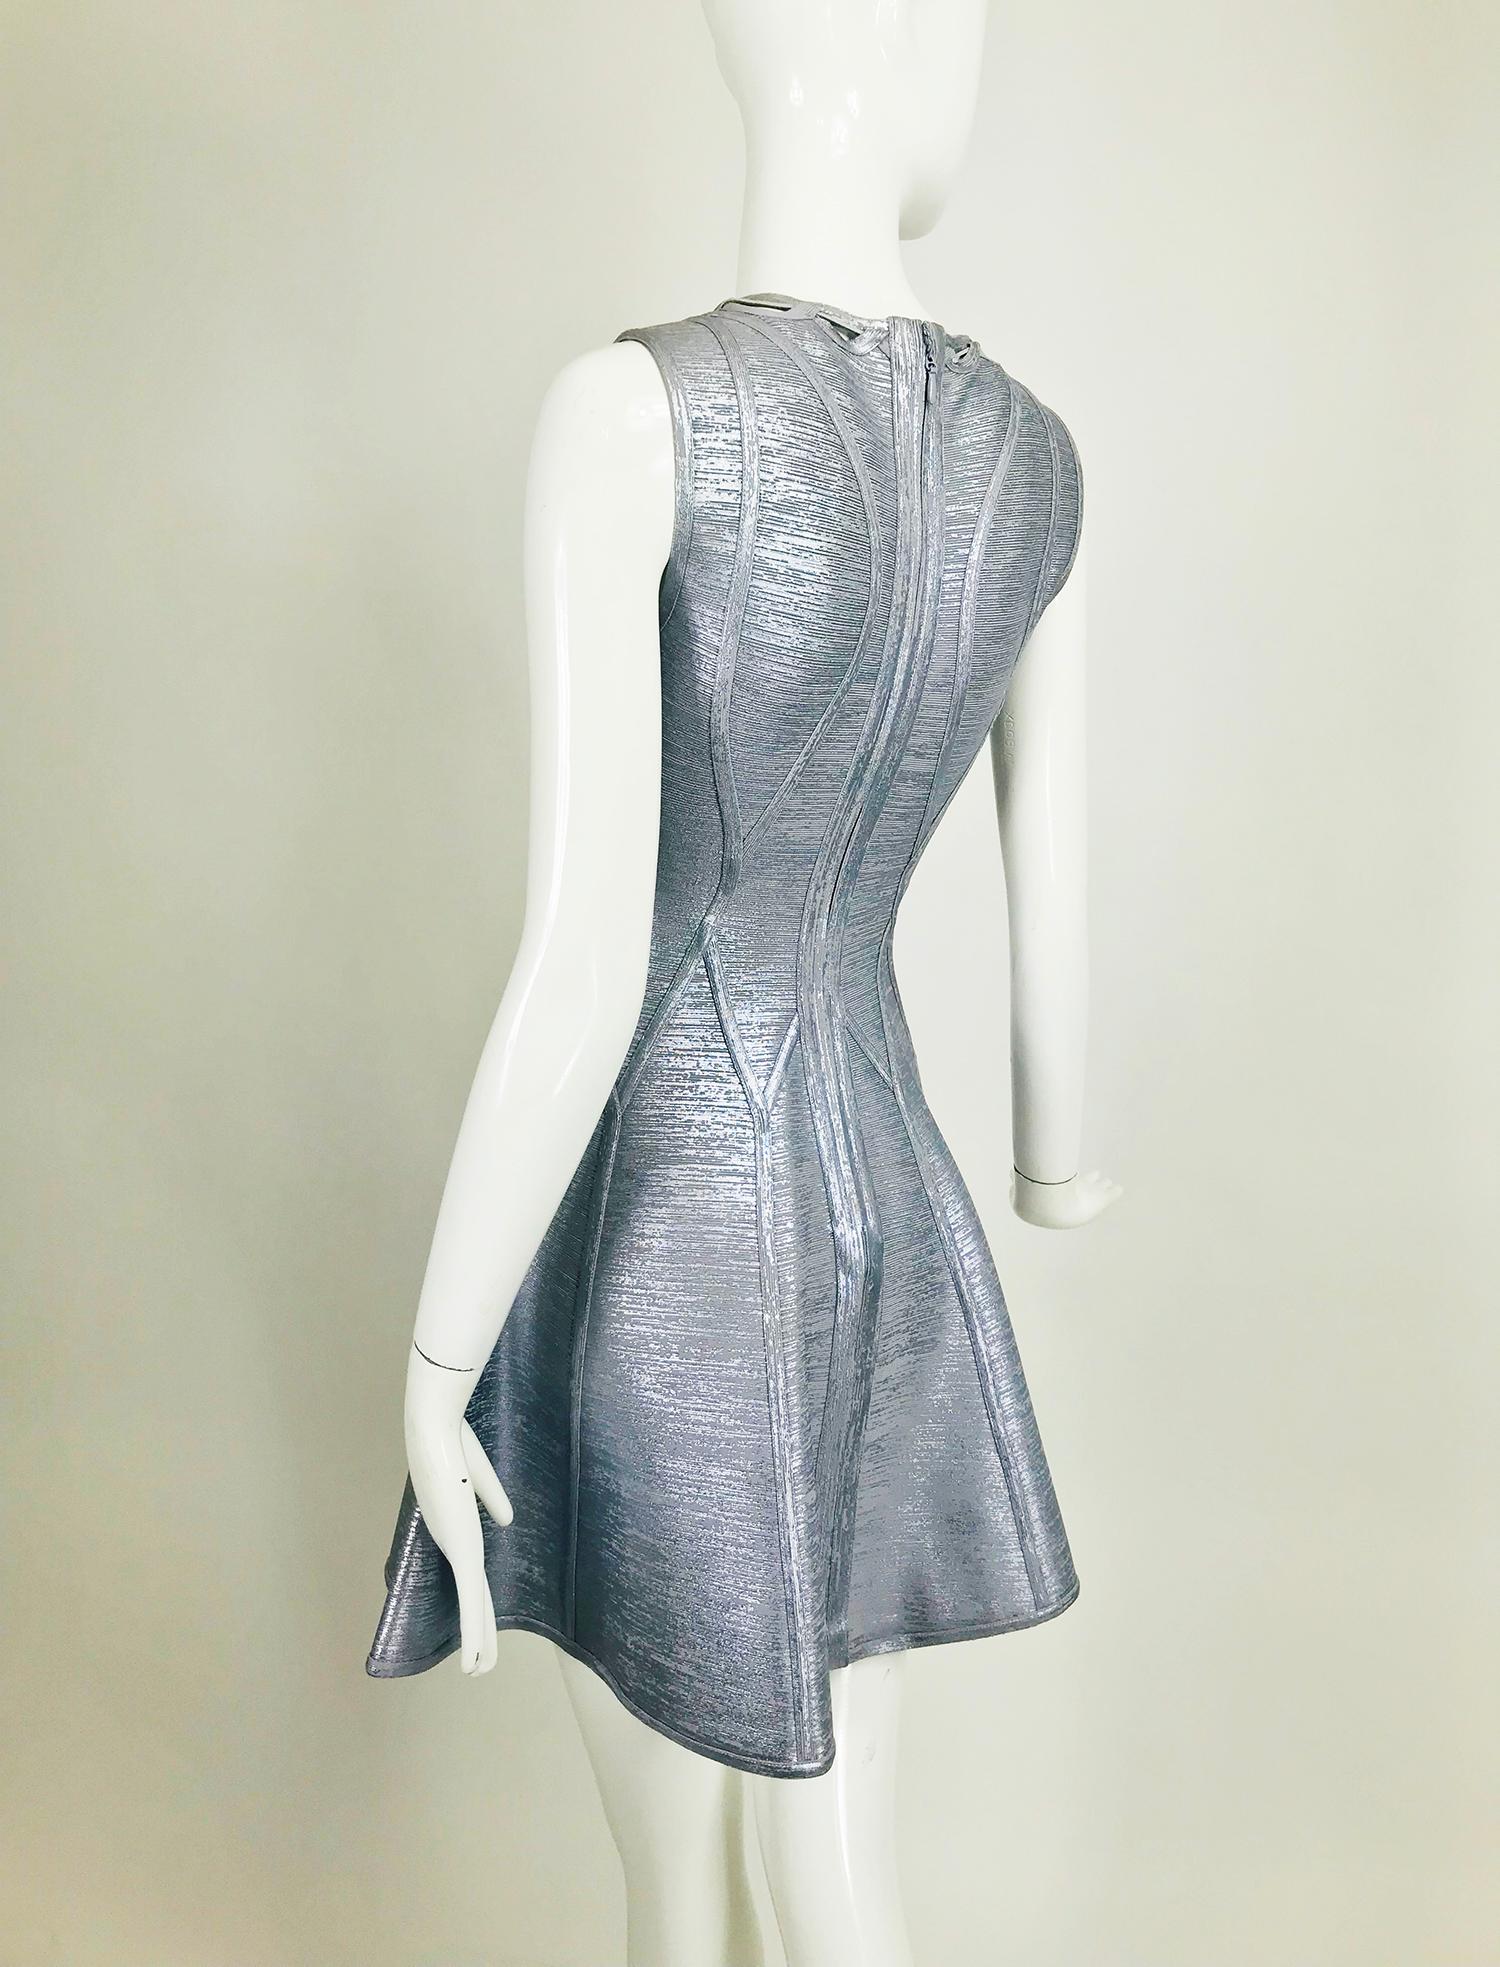 Herve Leger Silver Lavender Metallic Foil Lace Up Fit and Flare Bandage Dress 4